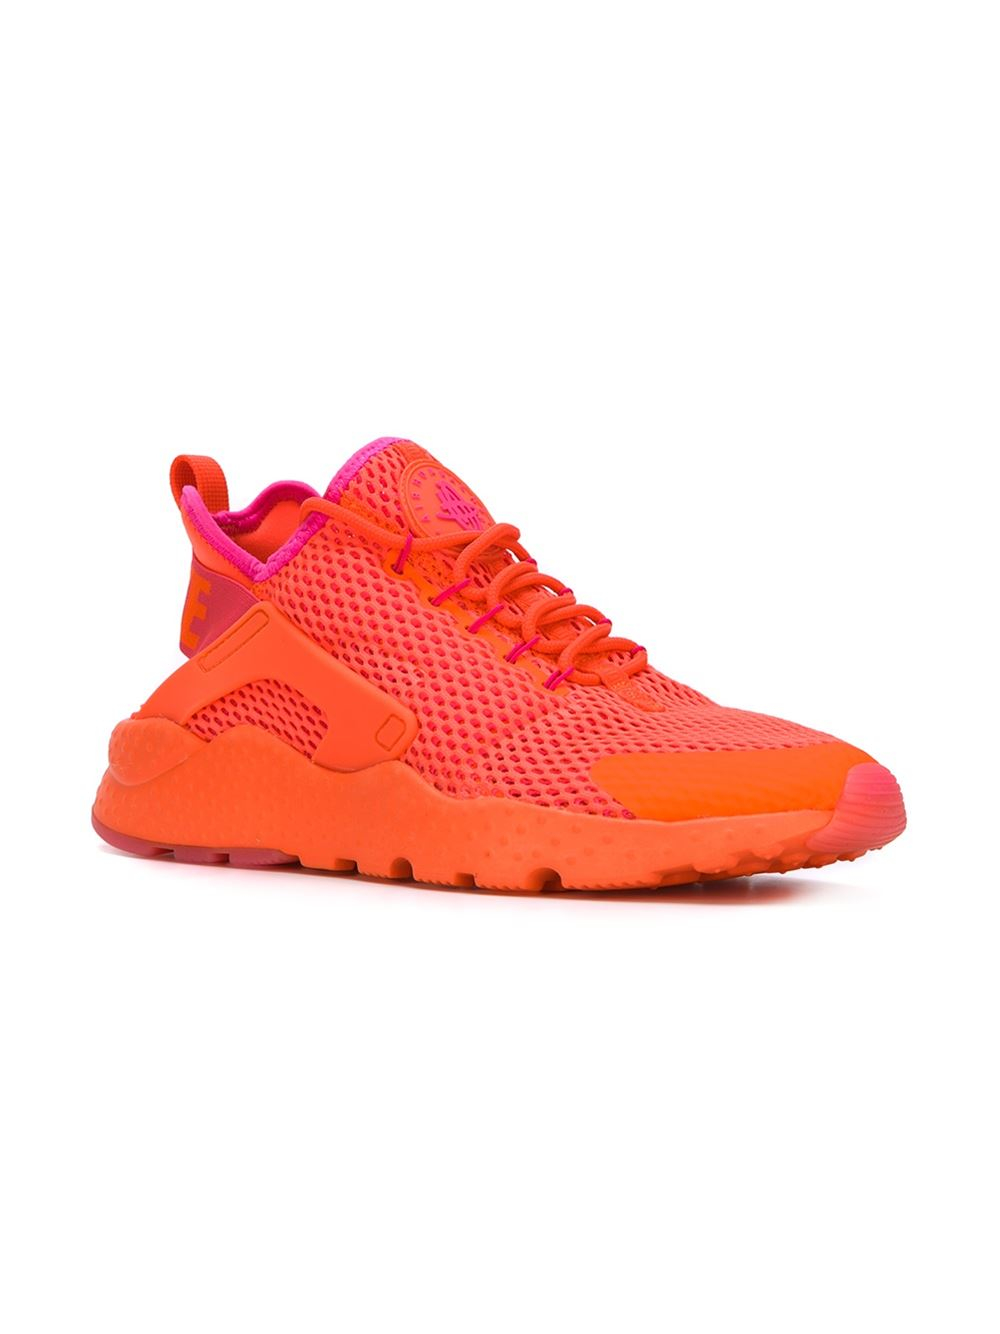 Nike 'Air Huarache Run Ultra Breathe' Sneakers in Yellow & Orange (Orange)  - Lyst